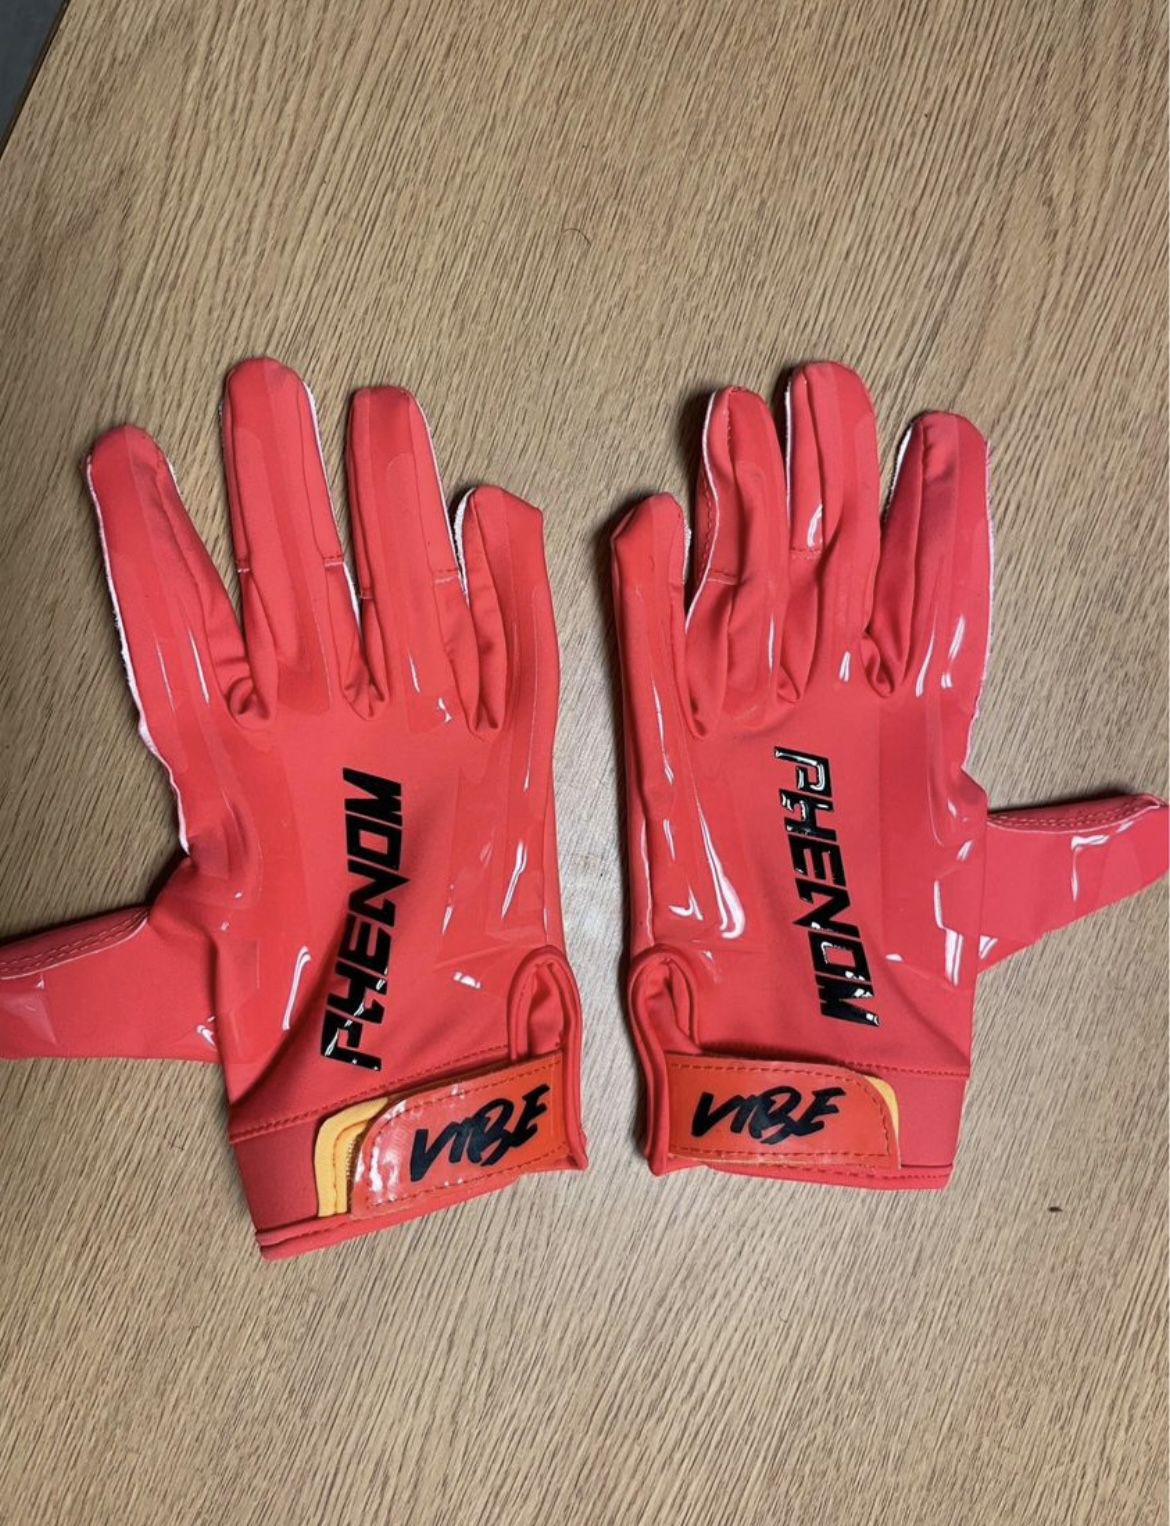 Phenom Football Gloves